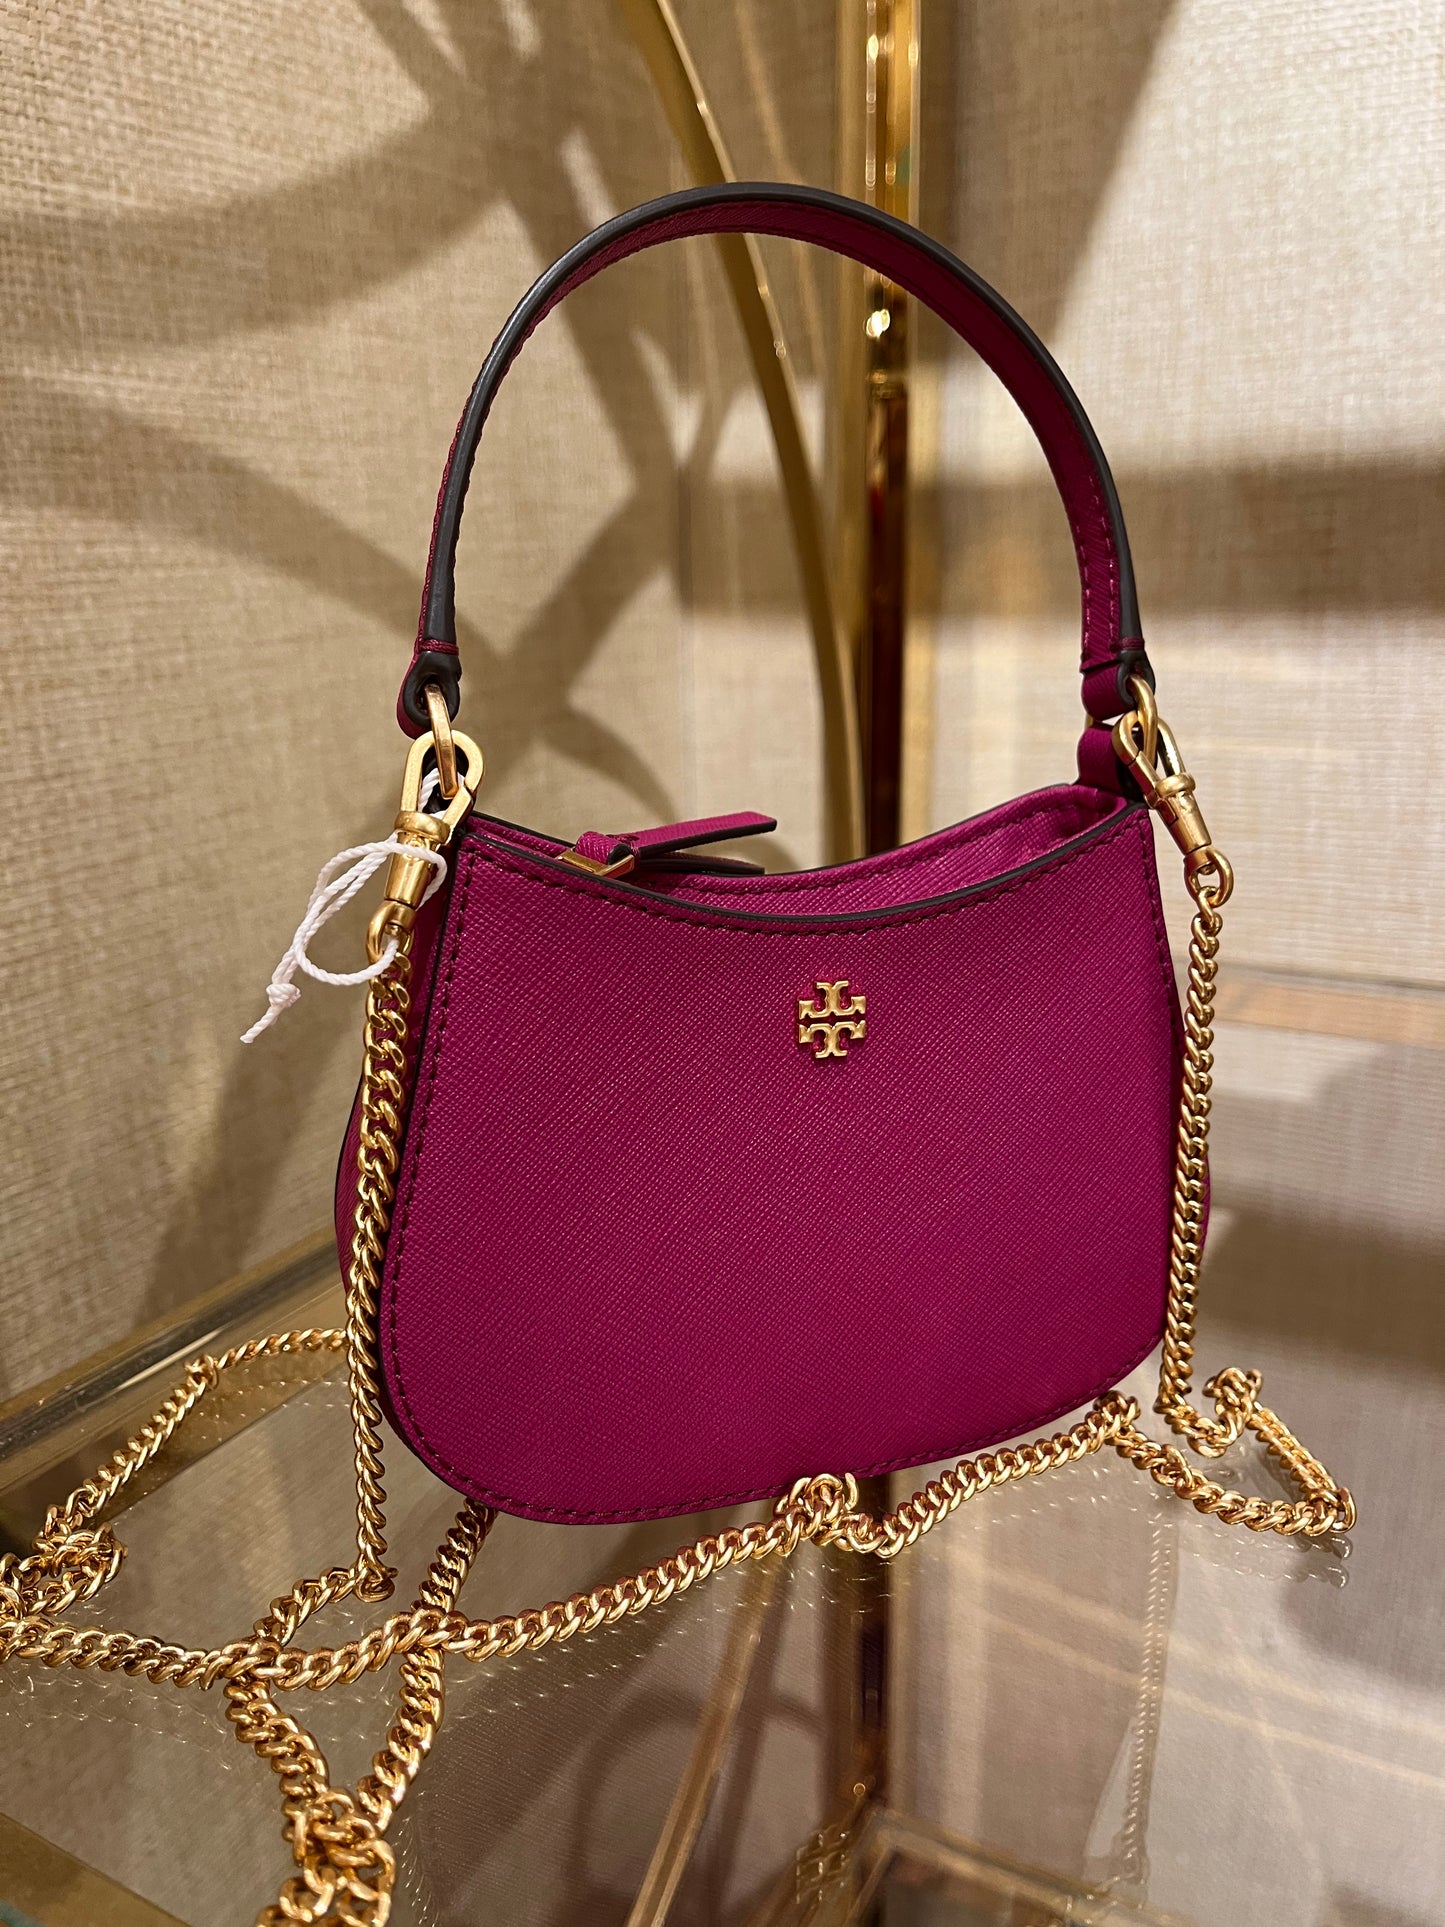 Tory Burch Emerson Chain MINI Nano Bag, Prickly Pear, Style 153347,Retail $198